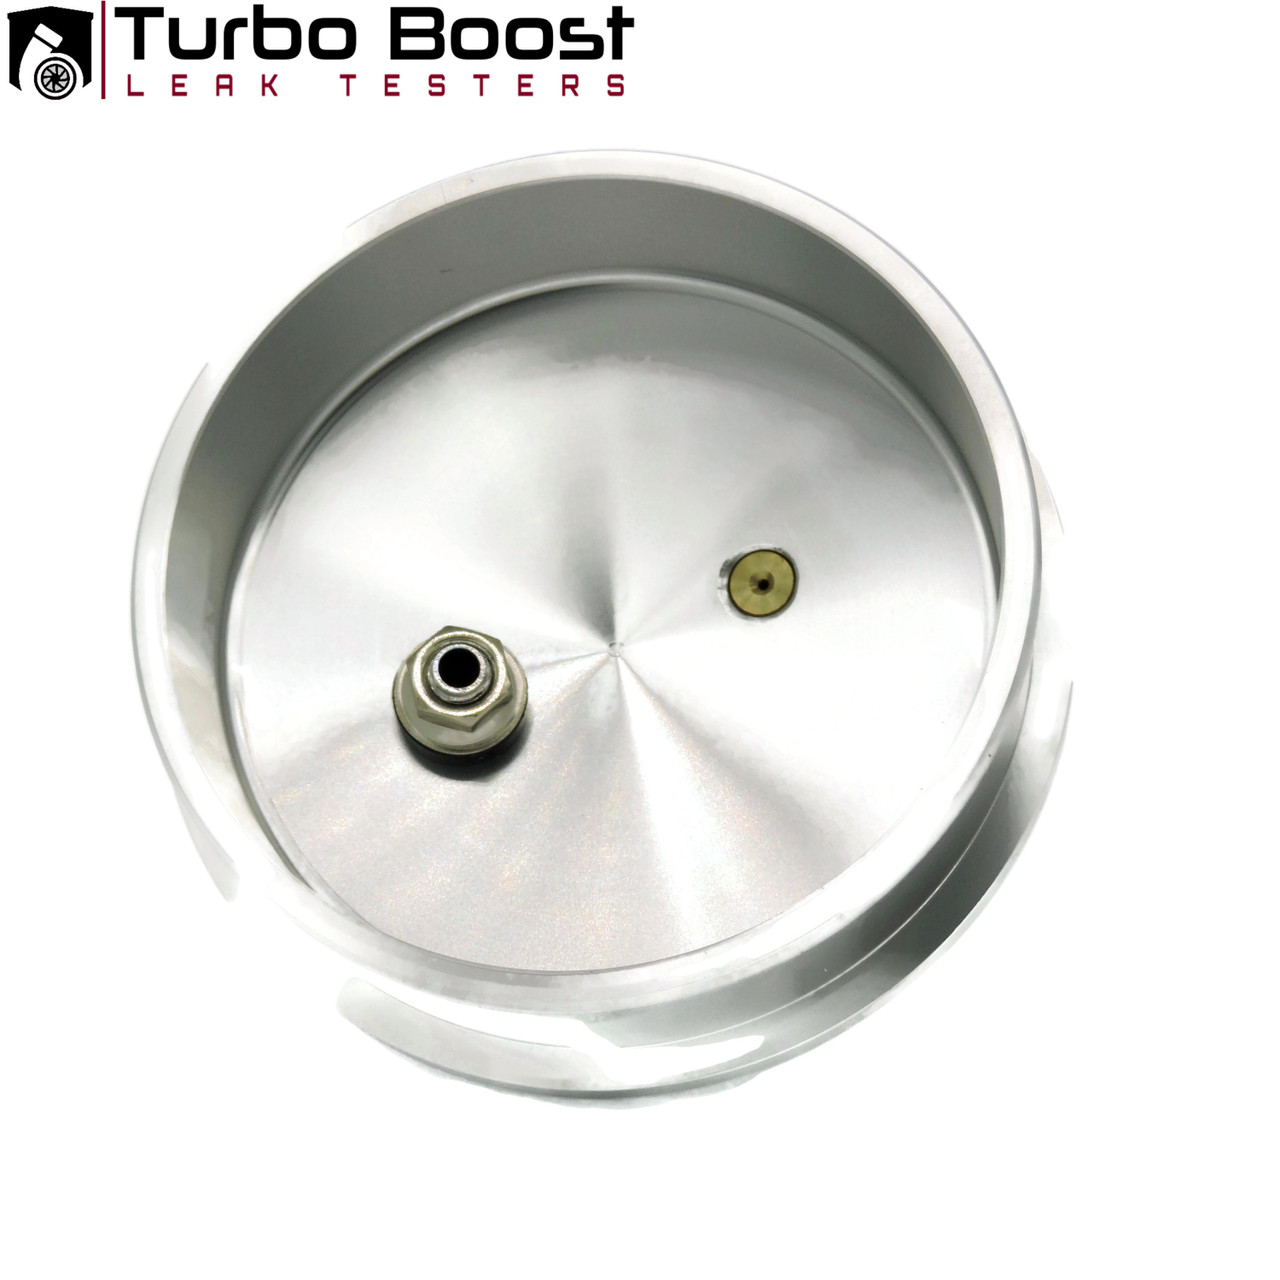 5.5 Pro-Kit Turbo Boost Leak Tester - Billet 6061 Aluminum